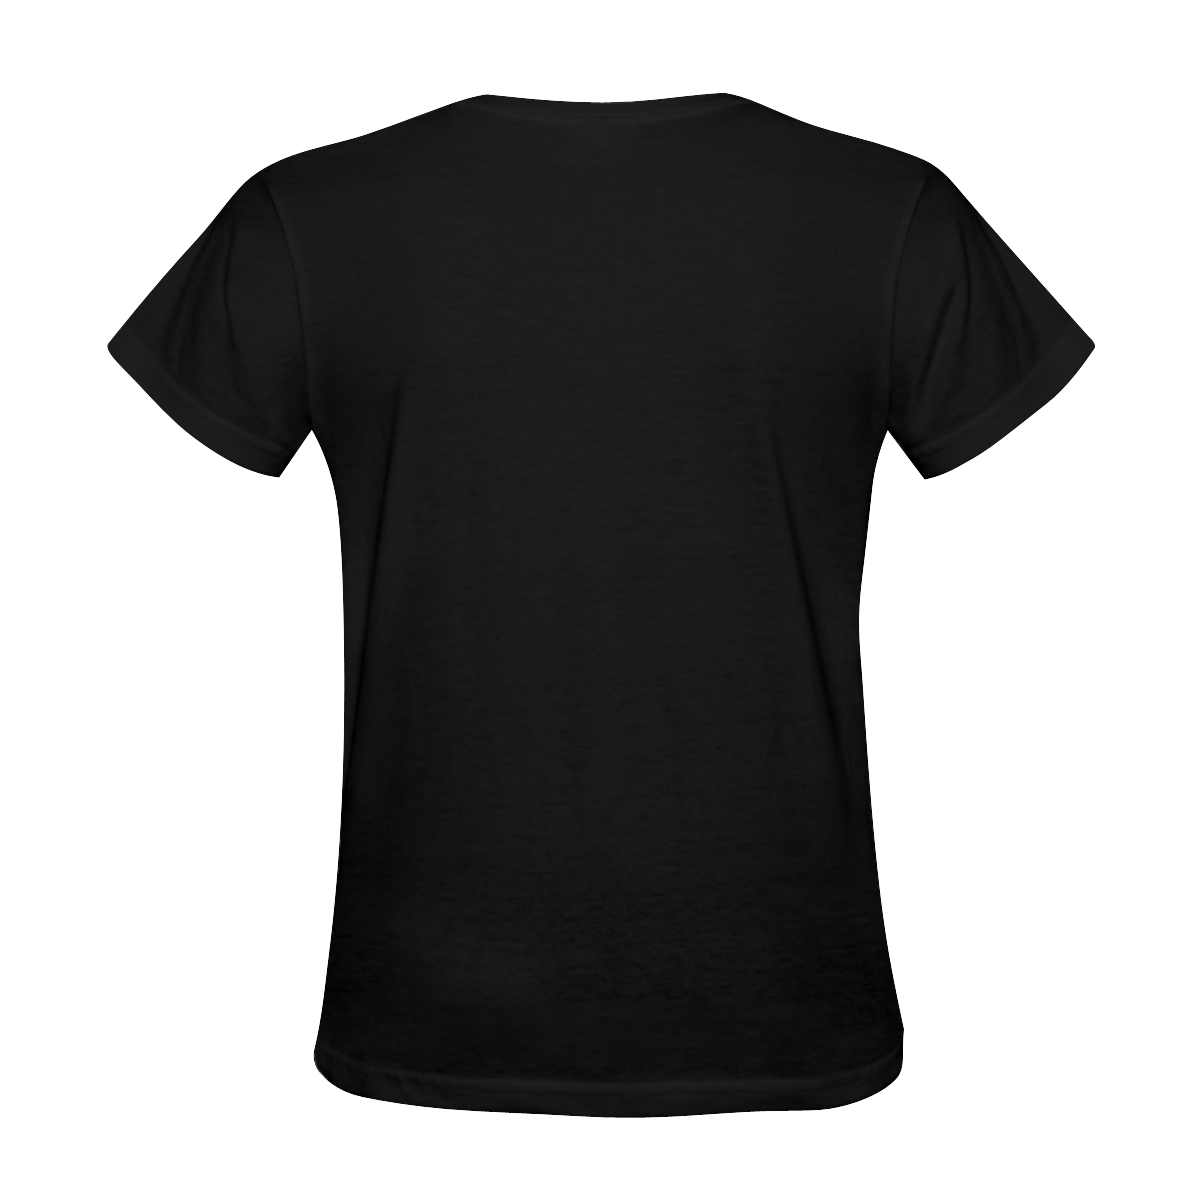 Dachshund Sugar Skull Black Women's T-Shirt in USA Size (Two Sides Printing)